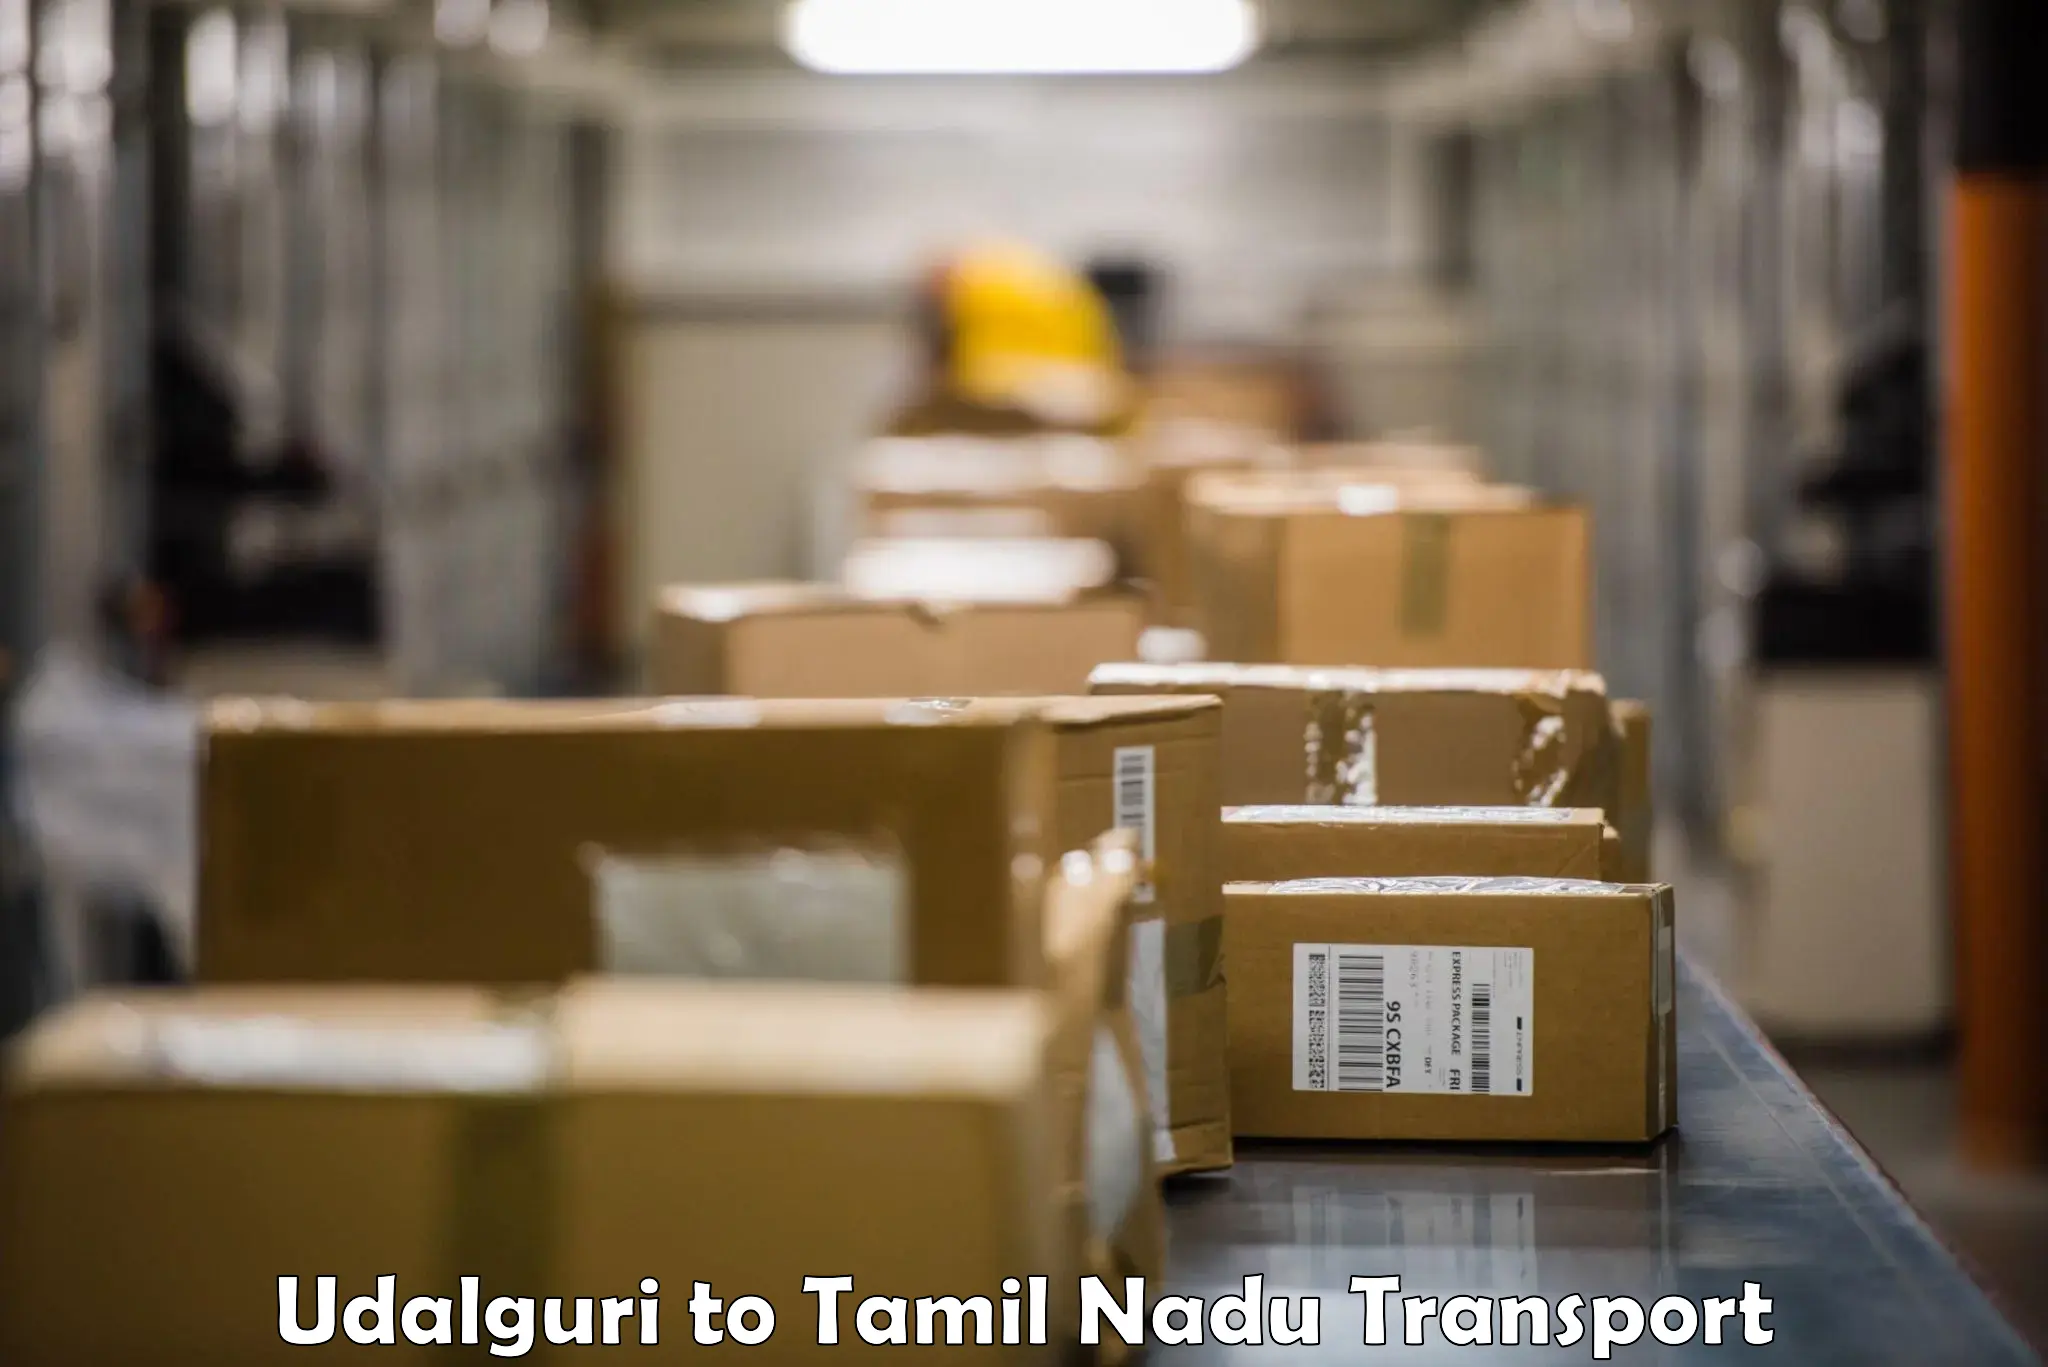 Goods delivery service Udalguri to Pudukkottai